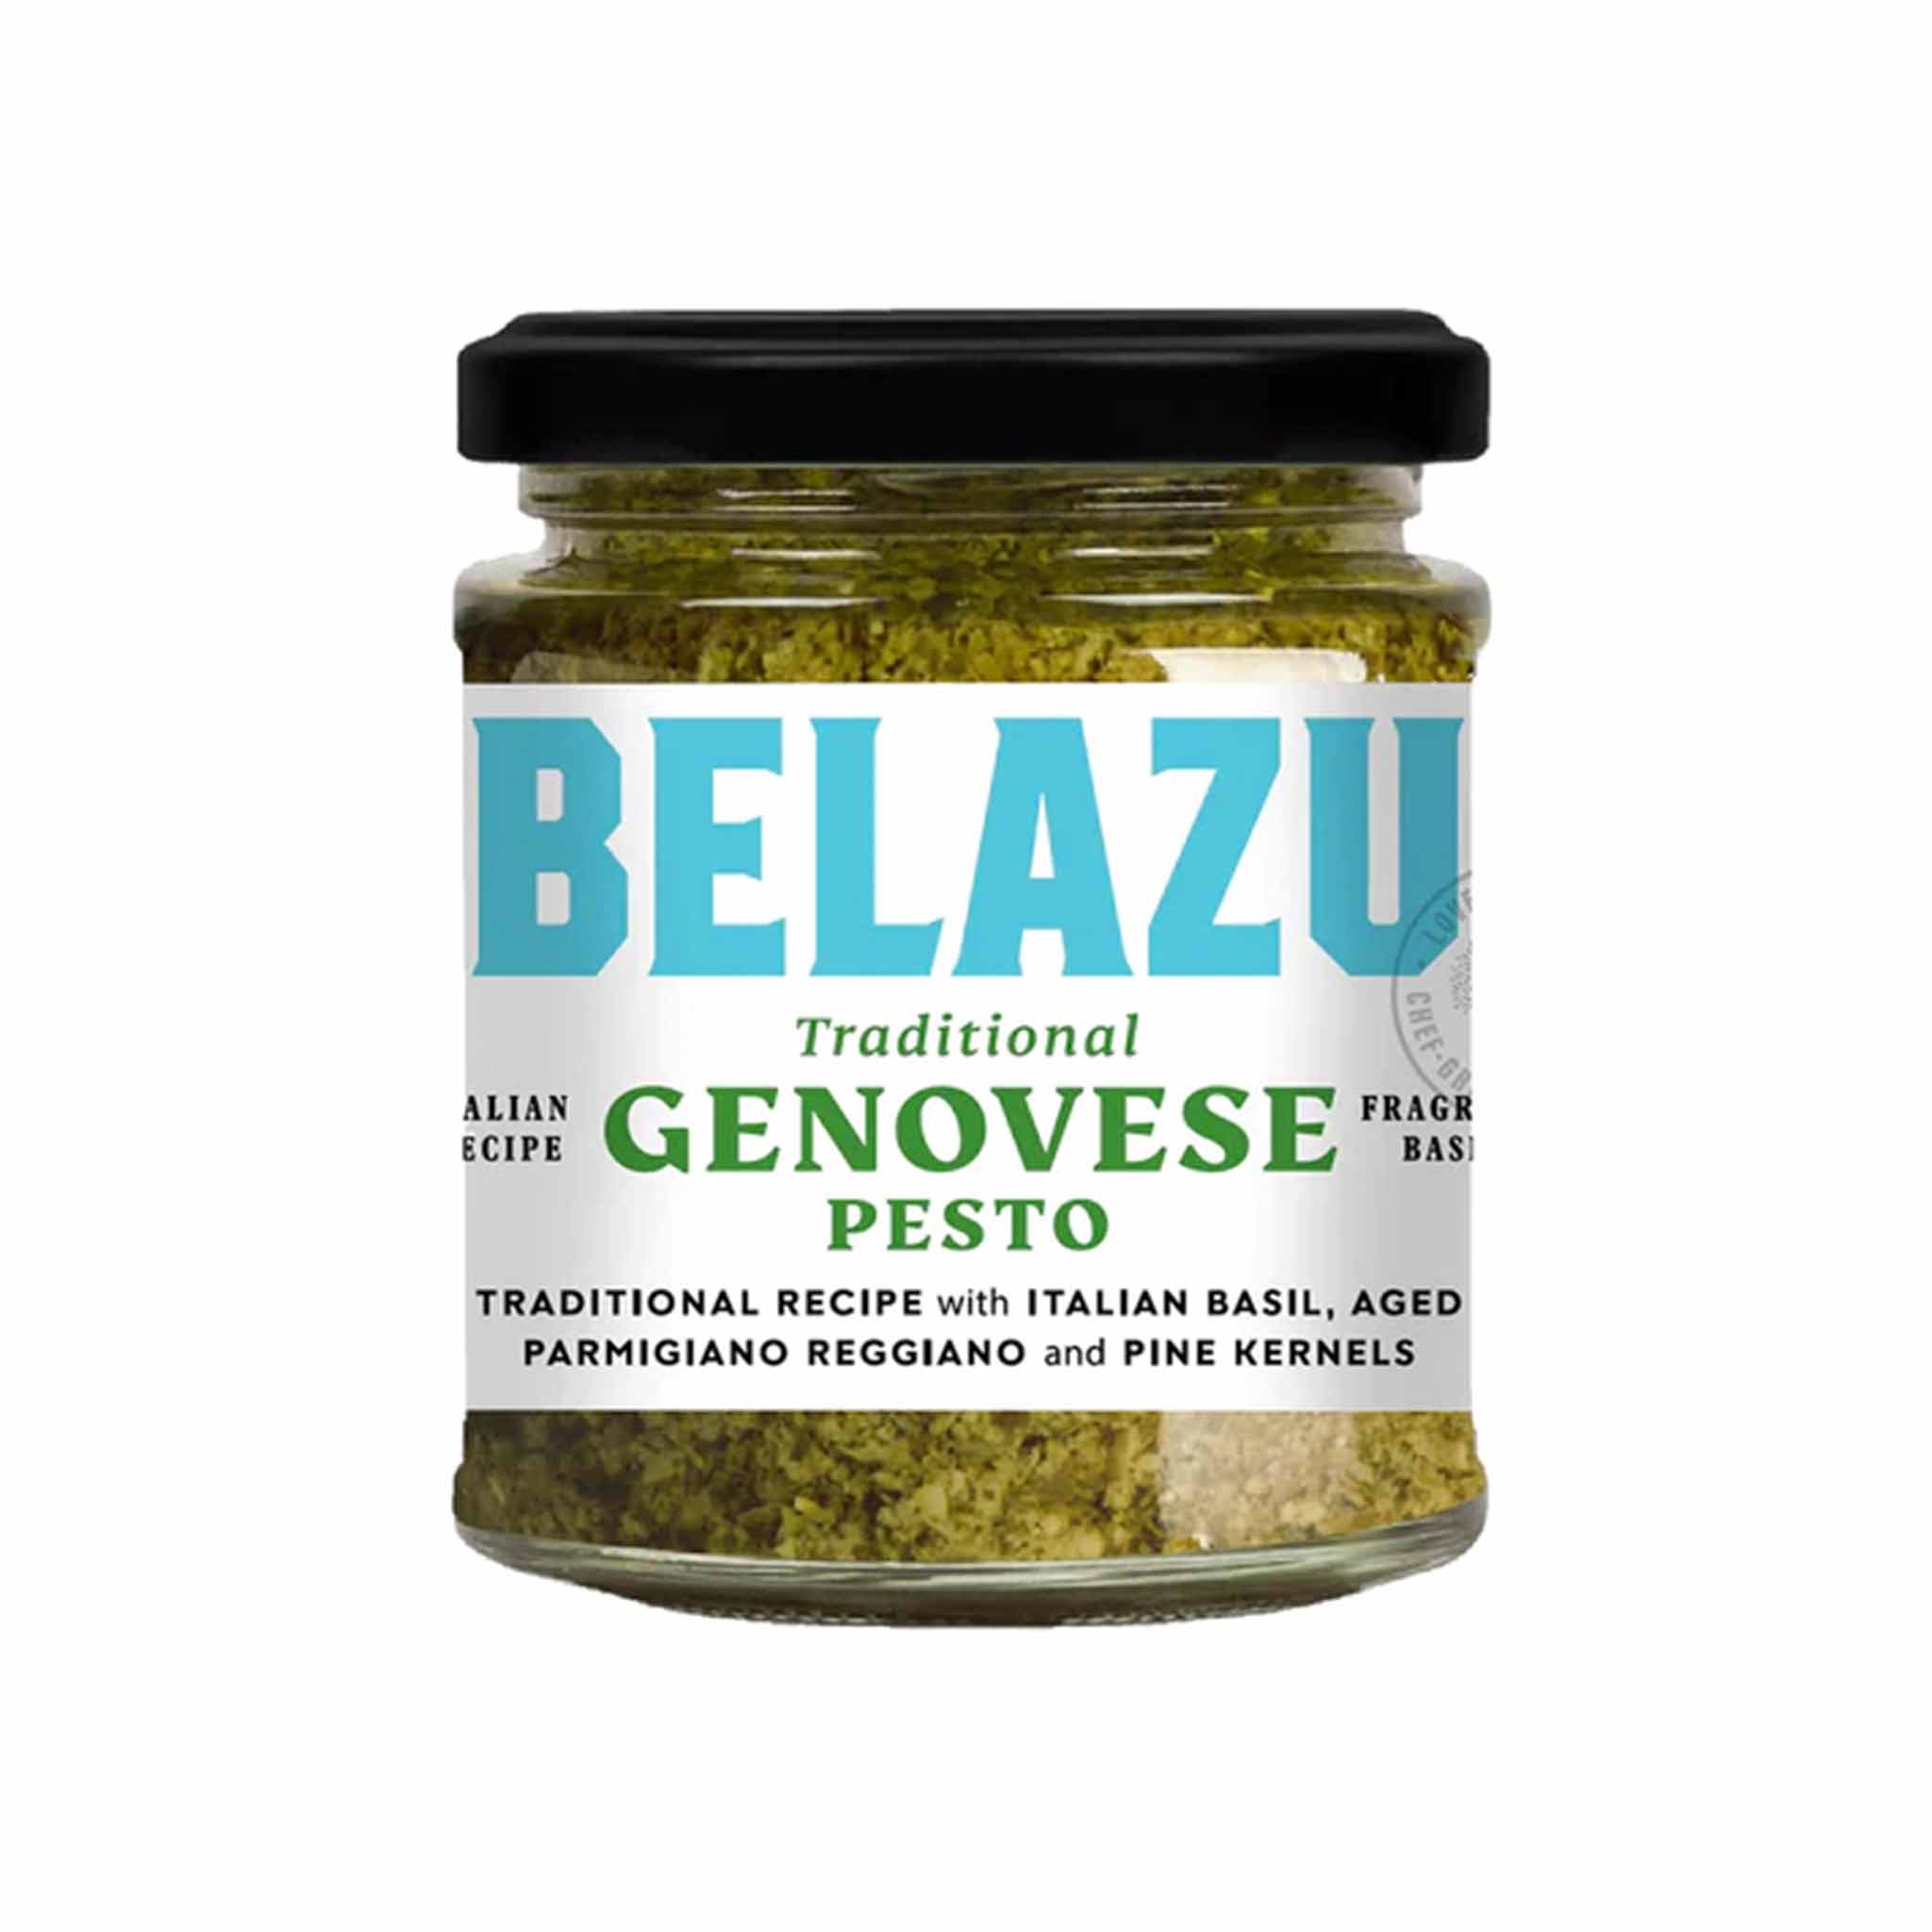 Belazu Traditional Genovese Pesto in a Glass Jar